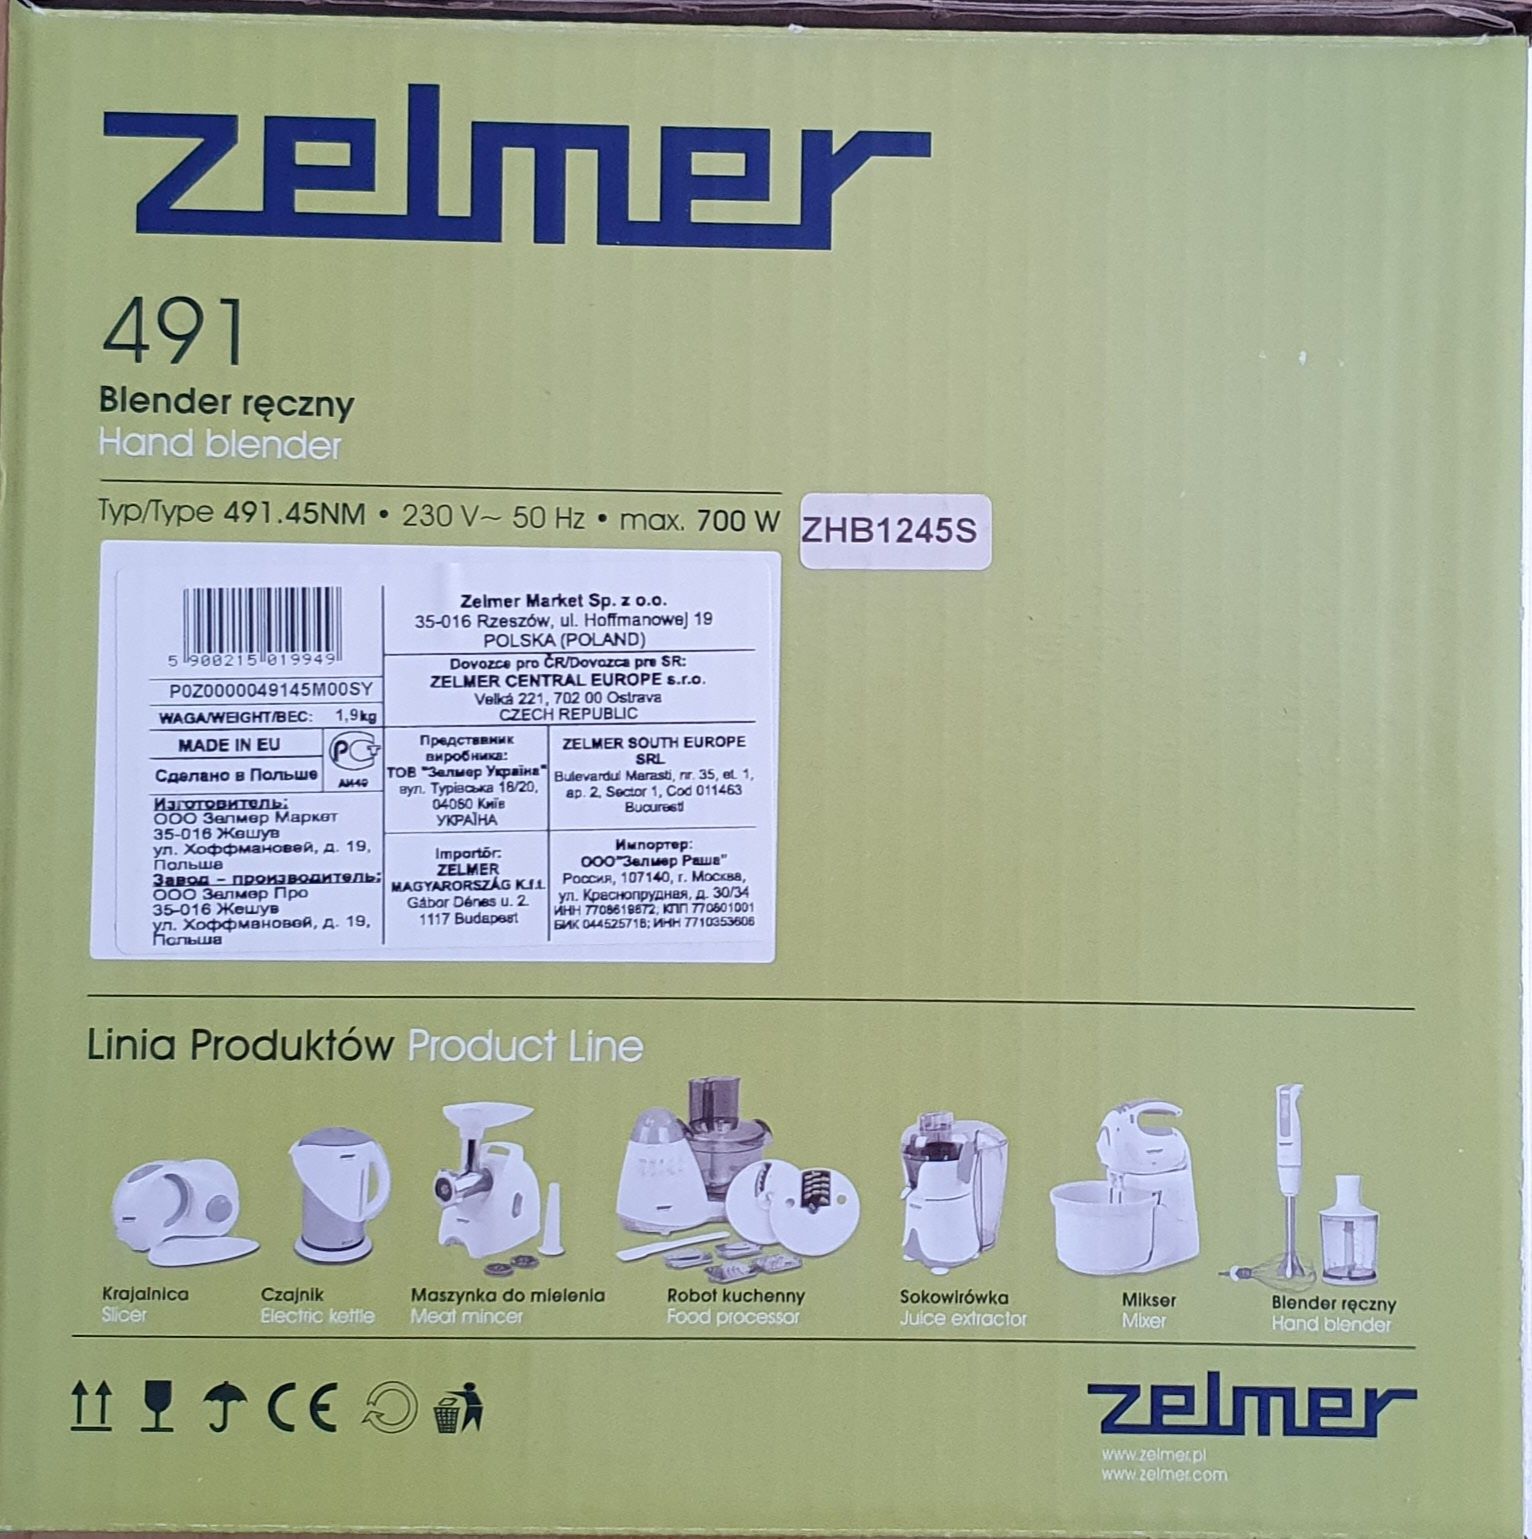 Blender ręczny Zelmer